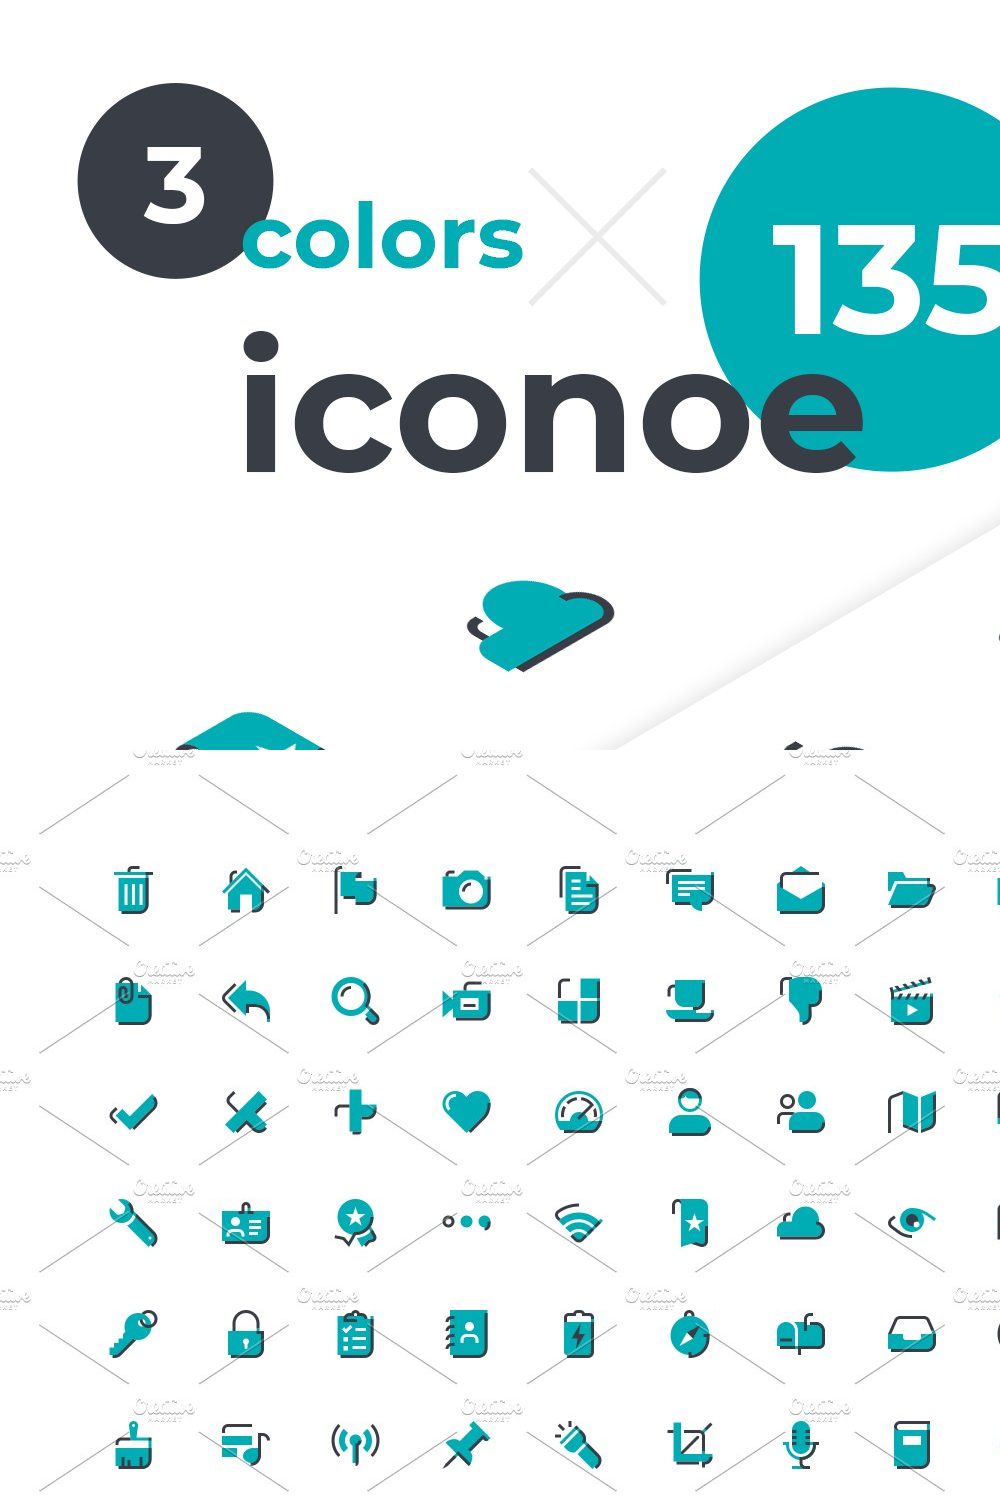 Iconoe - 135 DuoTone Icons pinterest preview image.